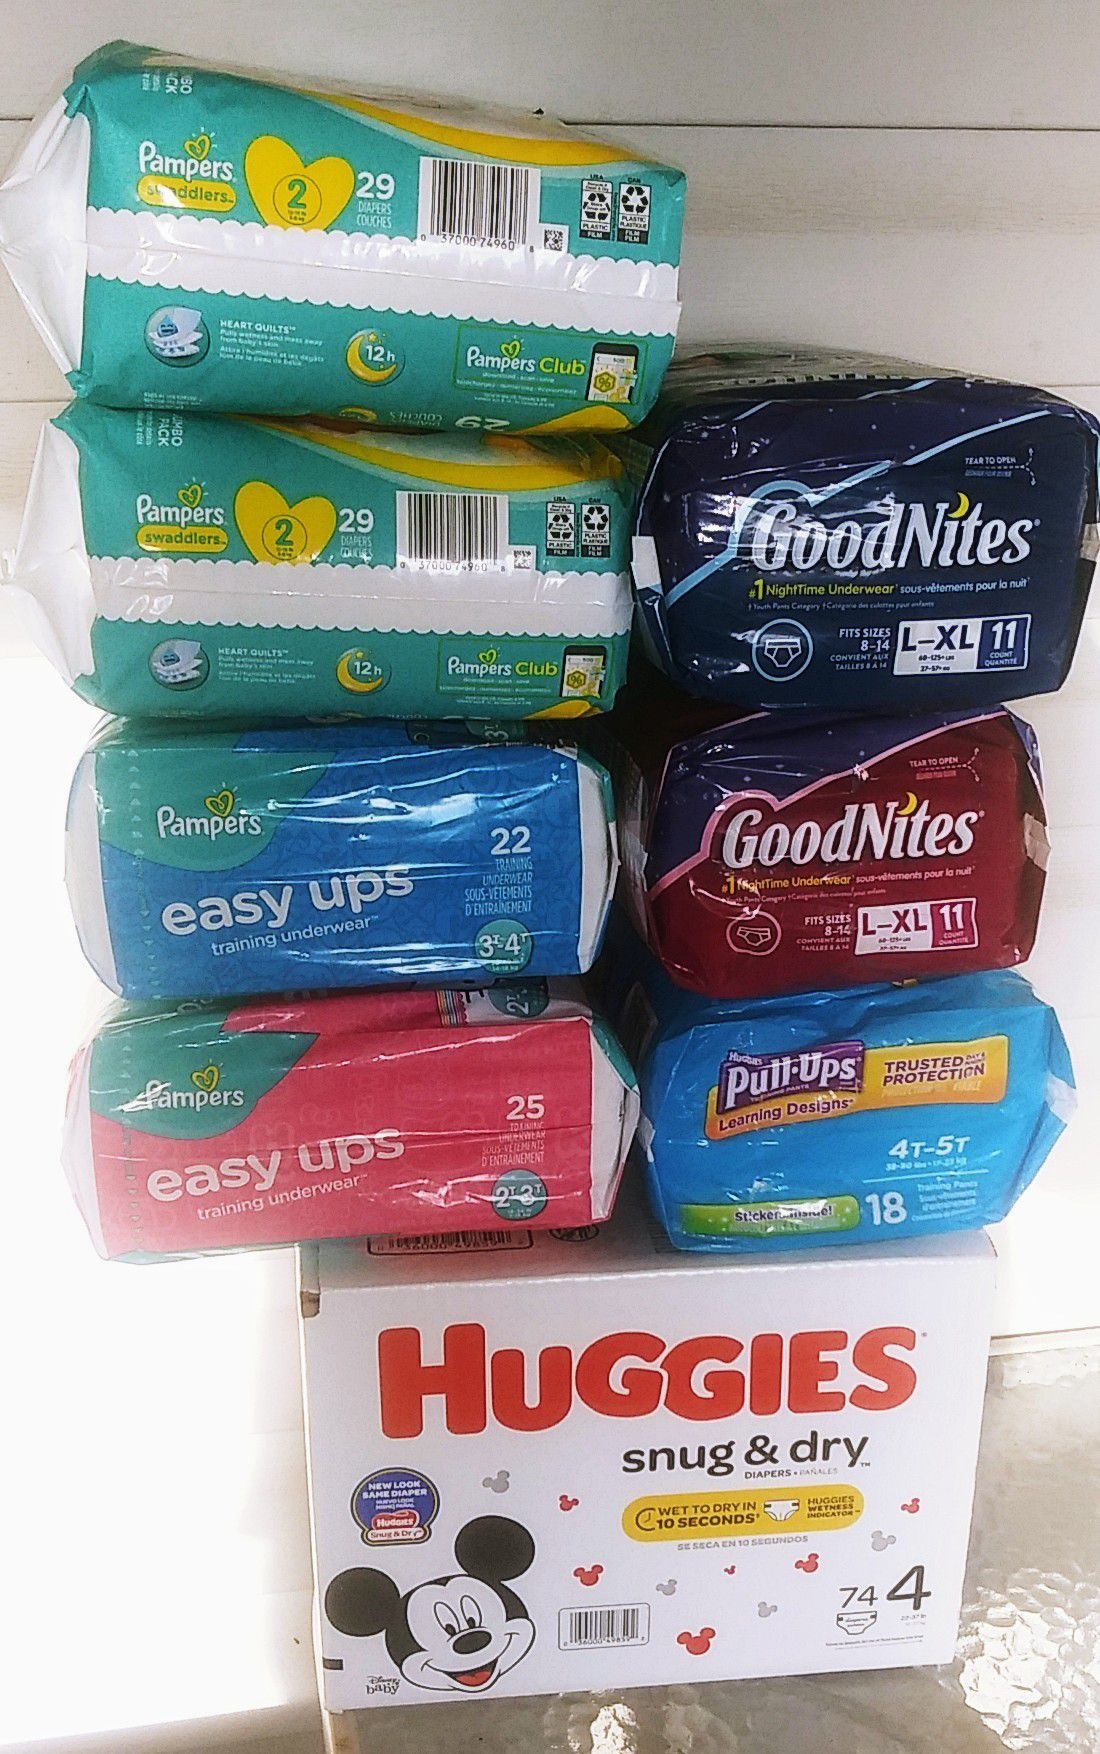 Random sizes of diapers, easy ups & pull ups